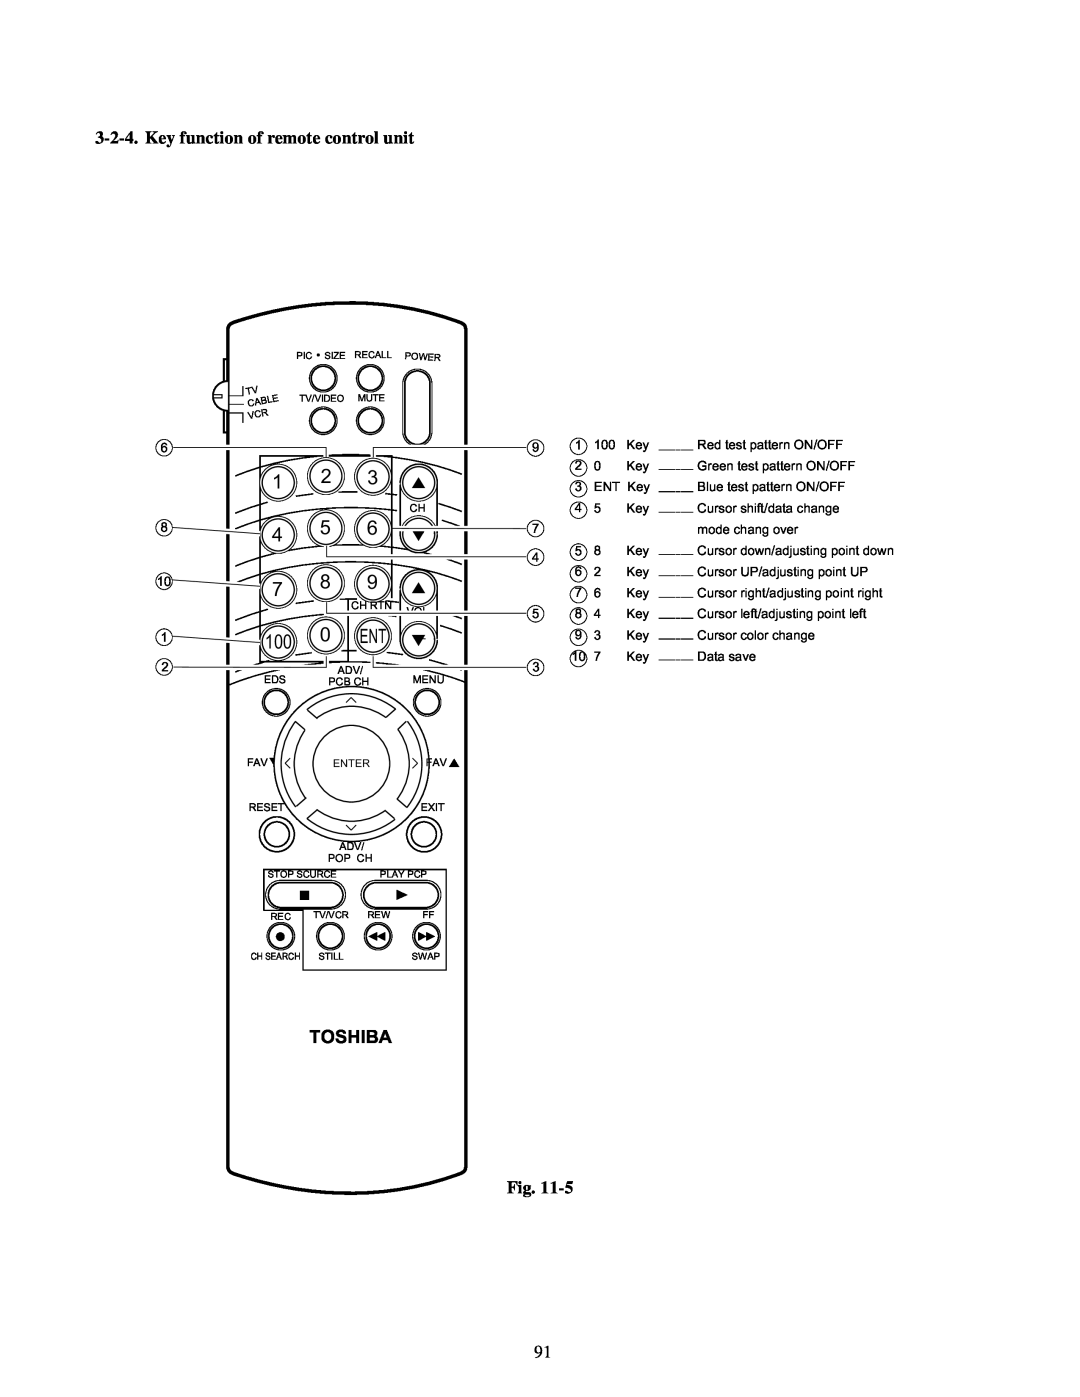 Toshiba TW40F80 manual Toshiba, Key function of remote control unit 